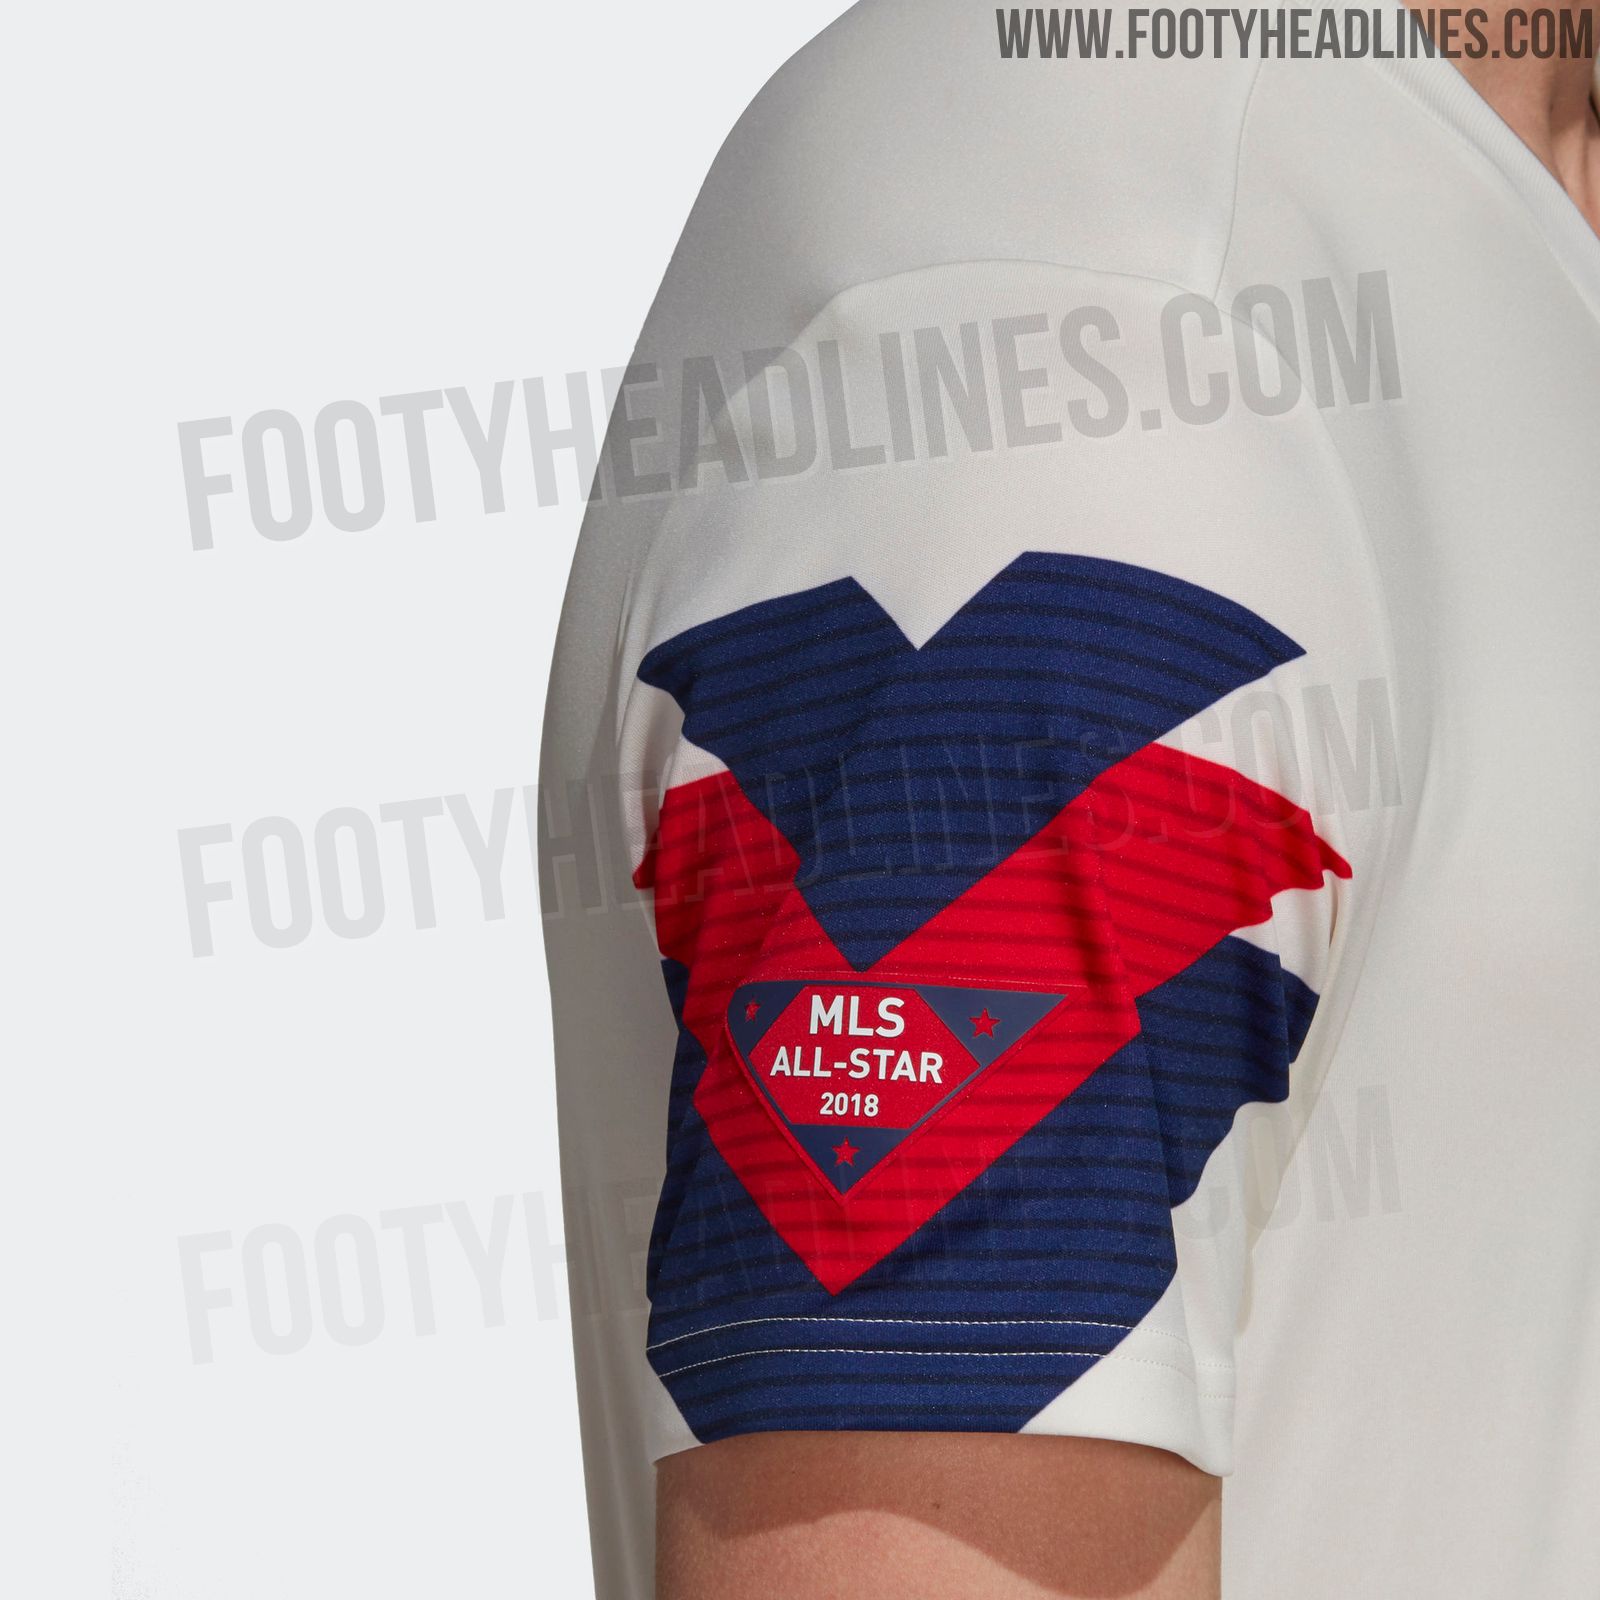 Amazing Adidas 2018 MLS Homegrown Game Kit Revealed - Footy Headlines